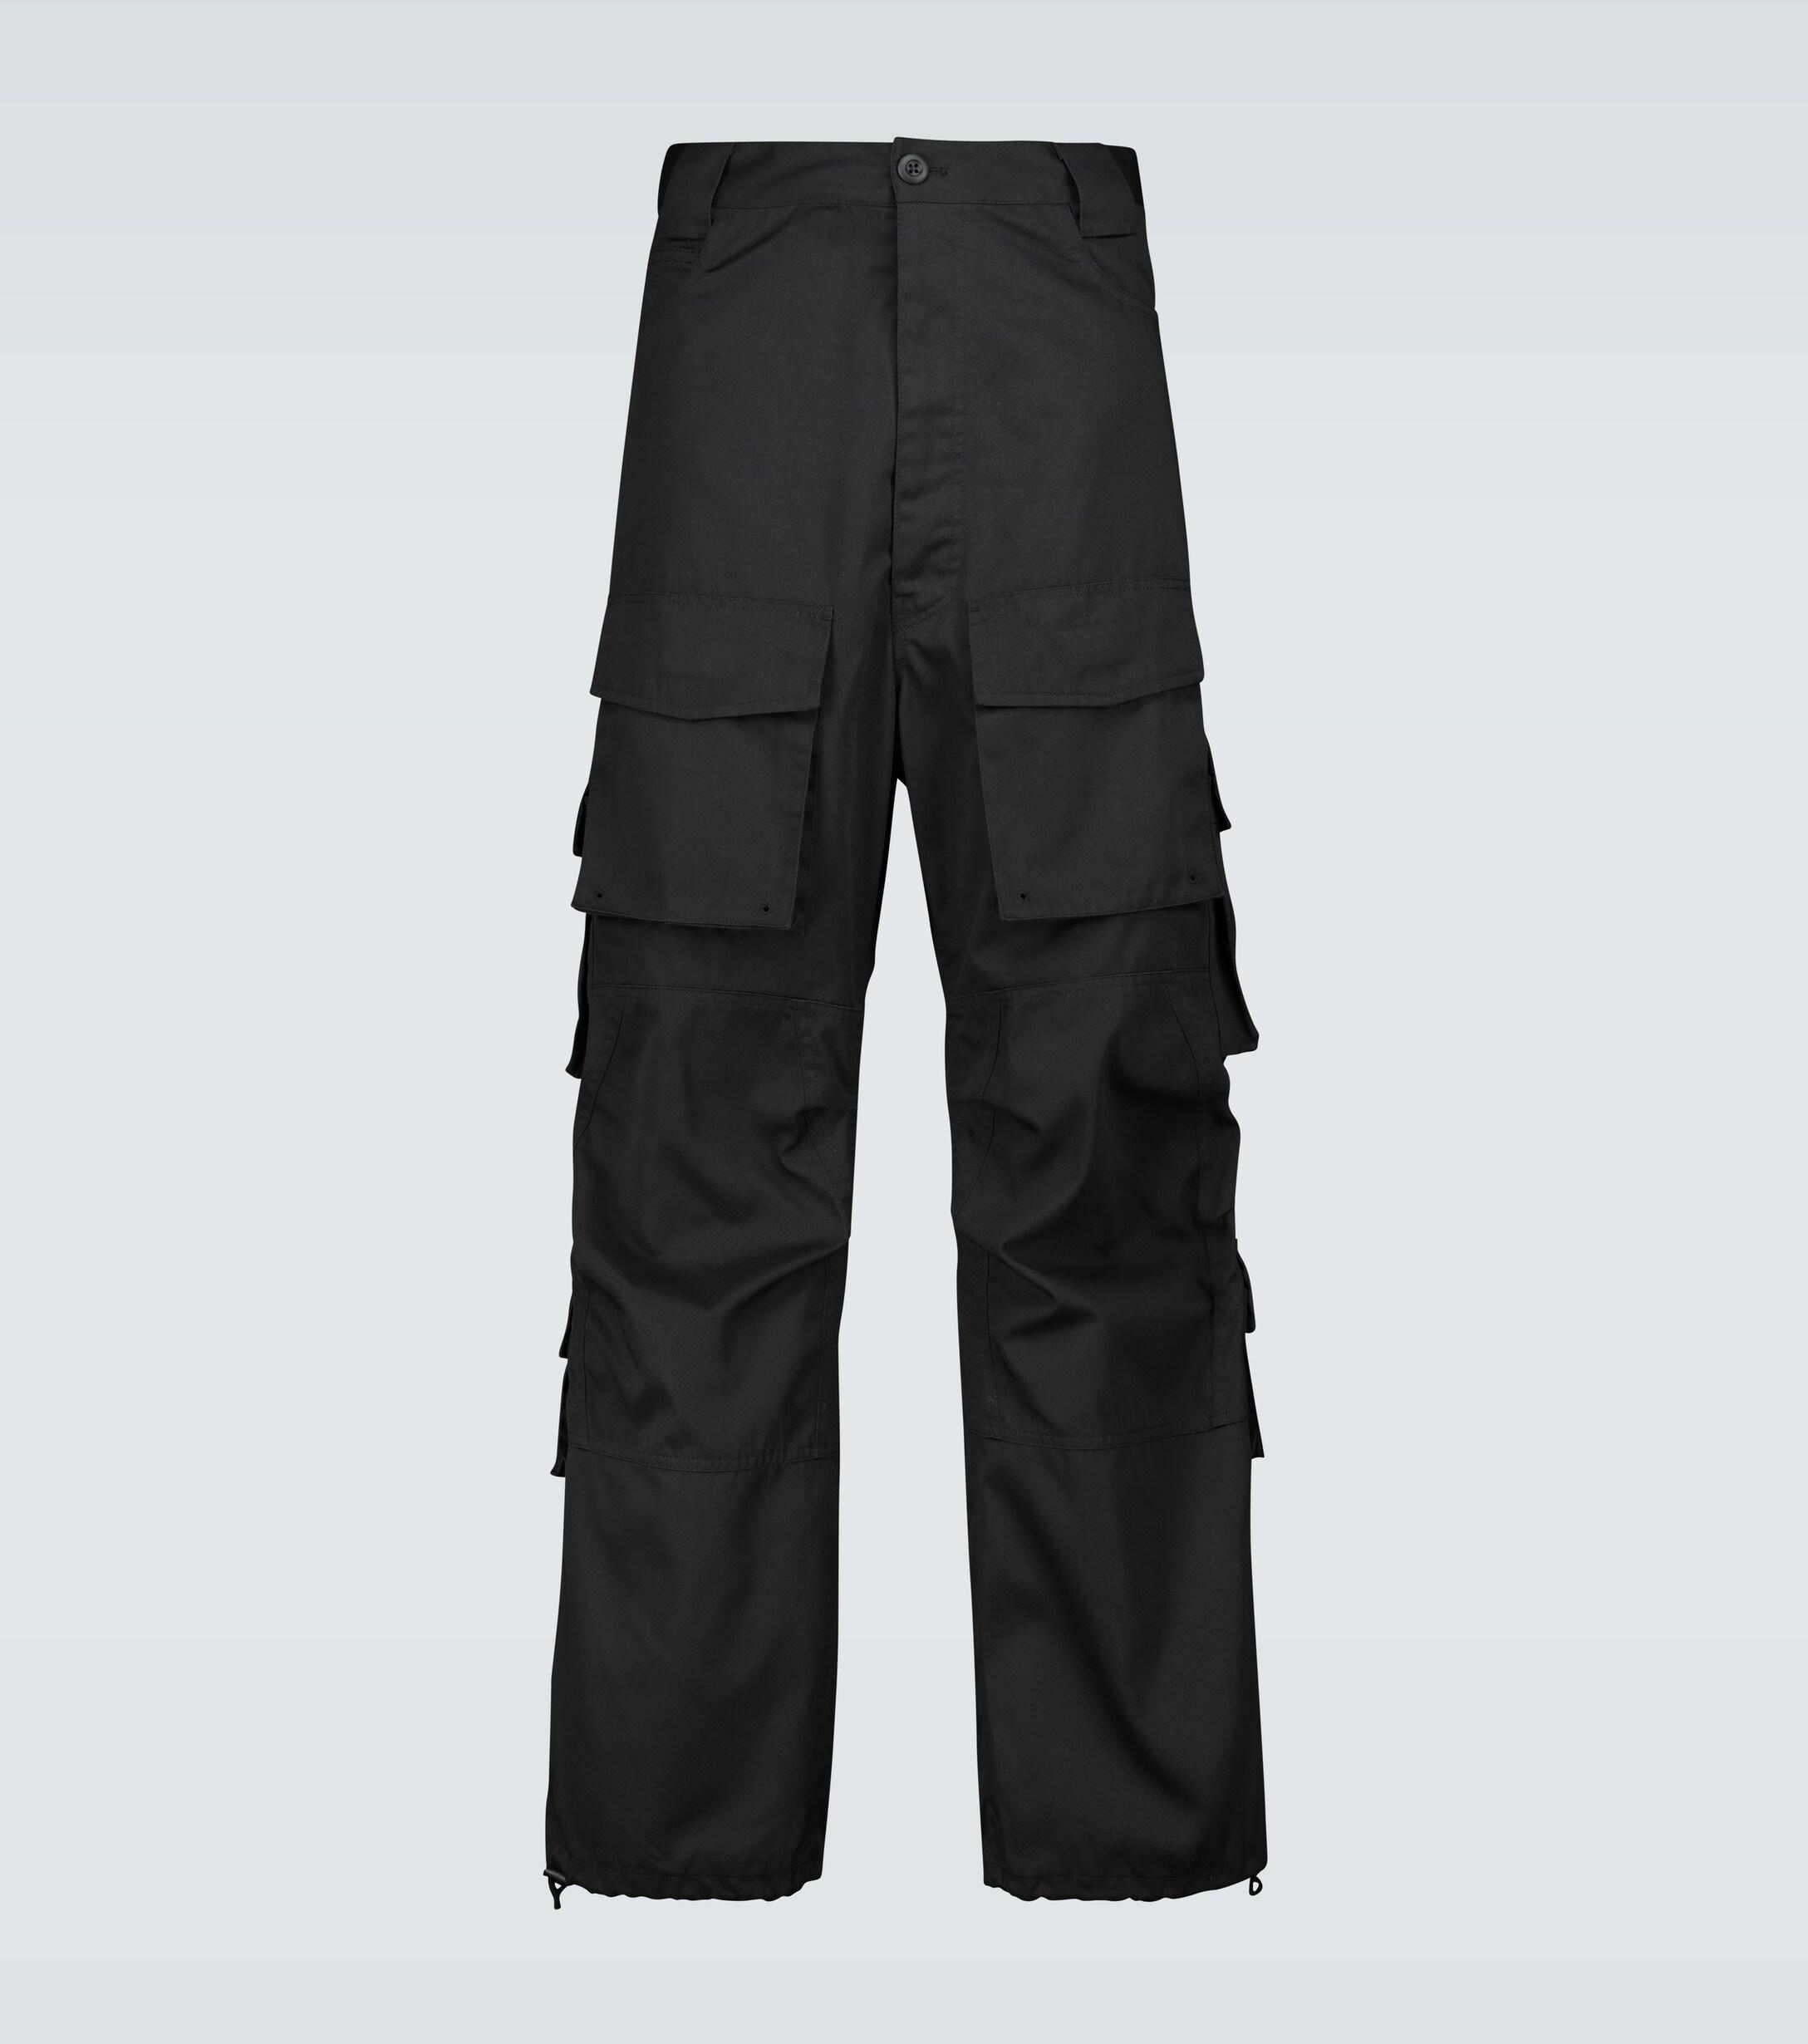 Balenciaga Cargo Pants in Black - Lyst